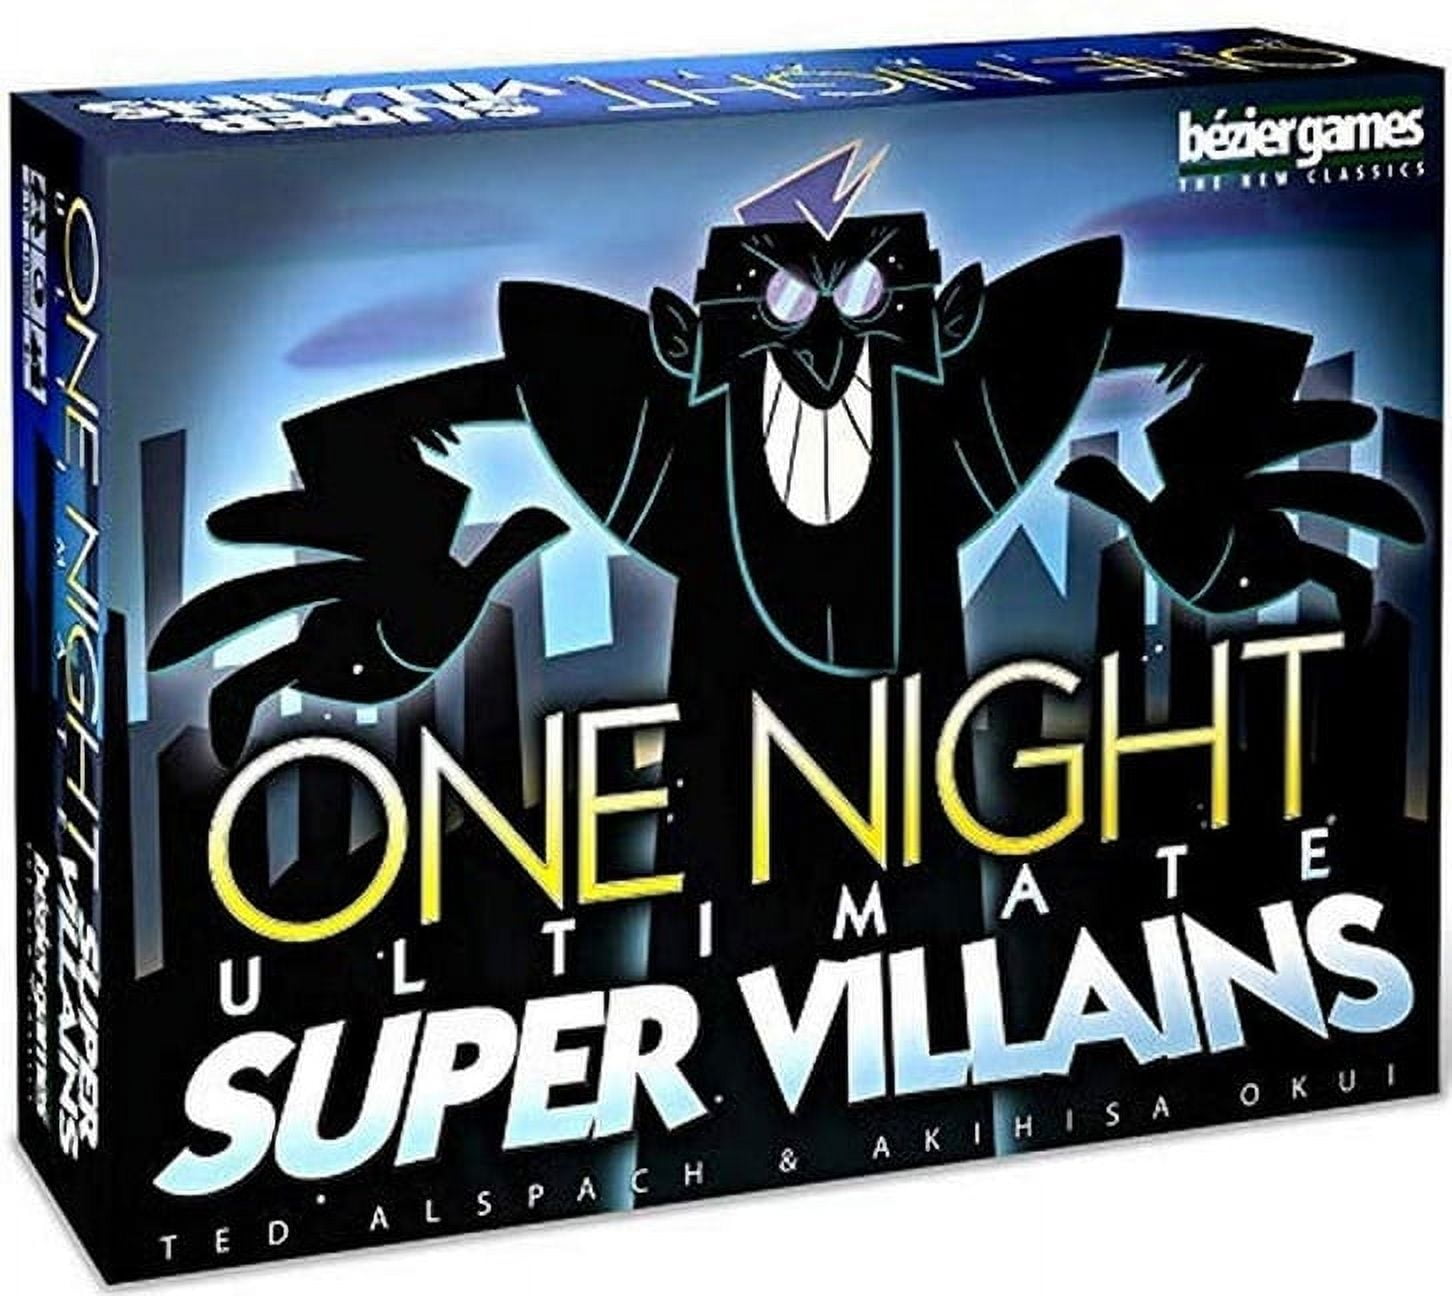 Board Games One Night Ultimate Werewolf Daybreak vampire alien